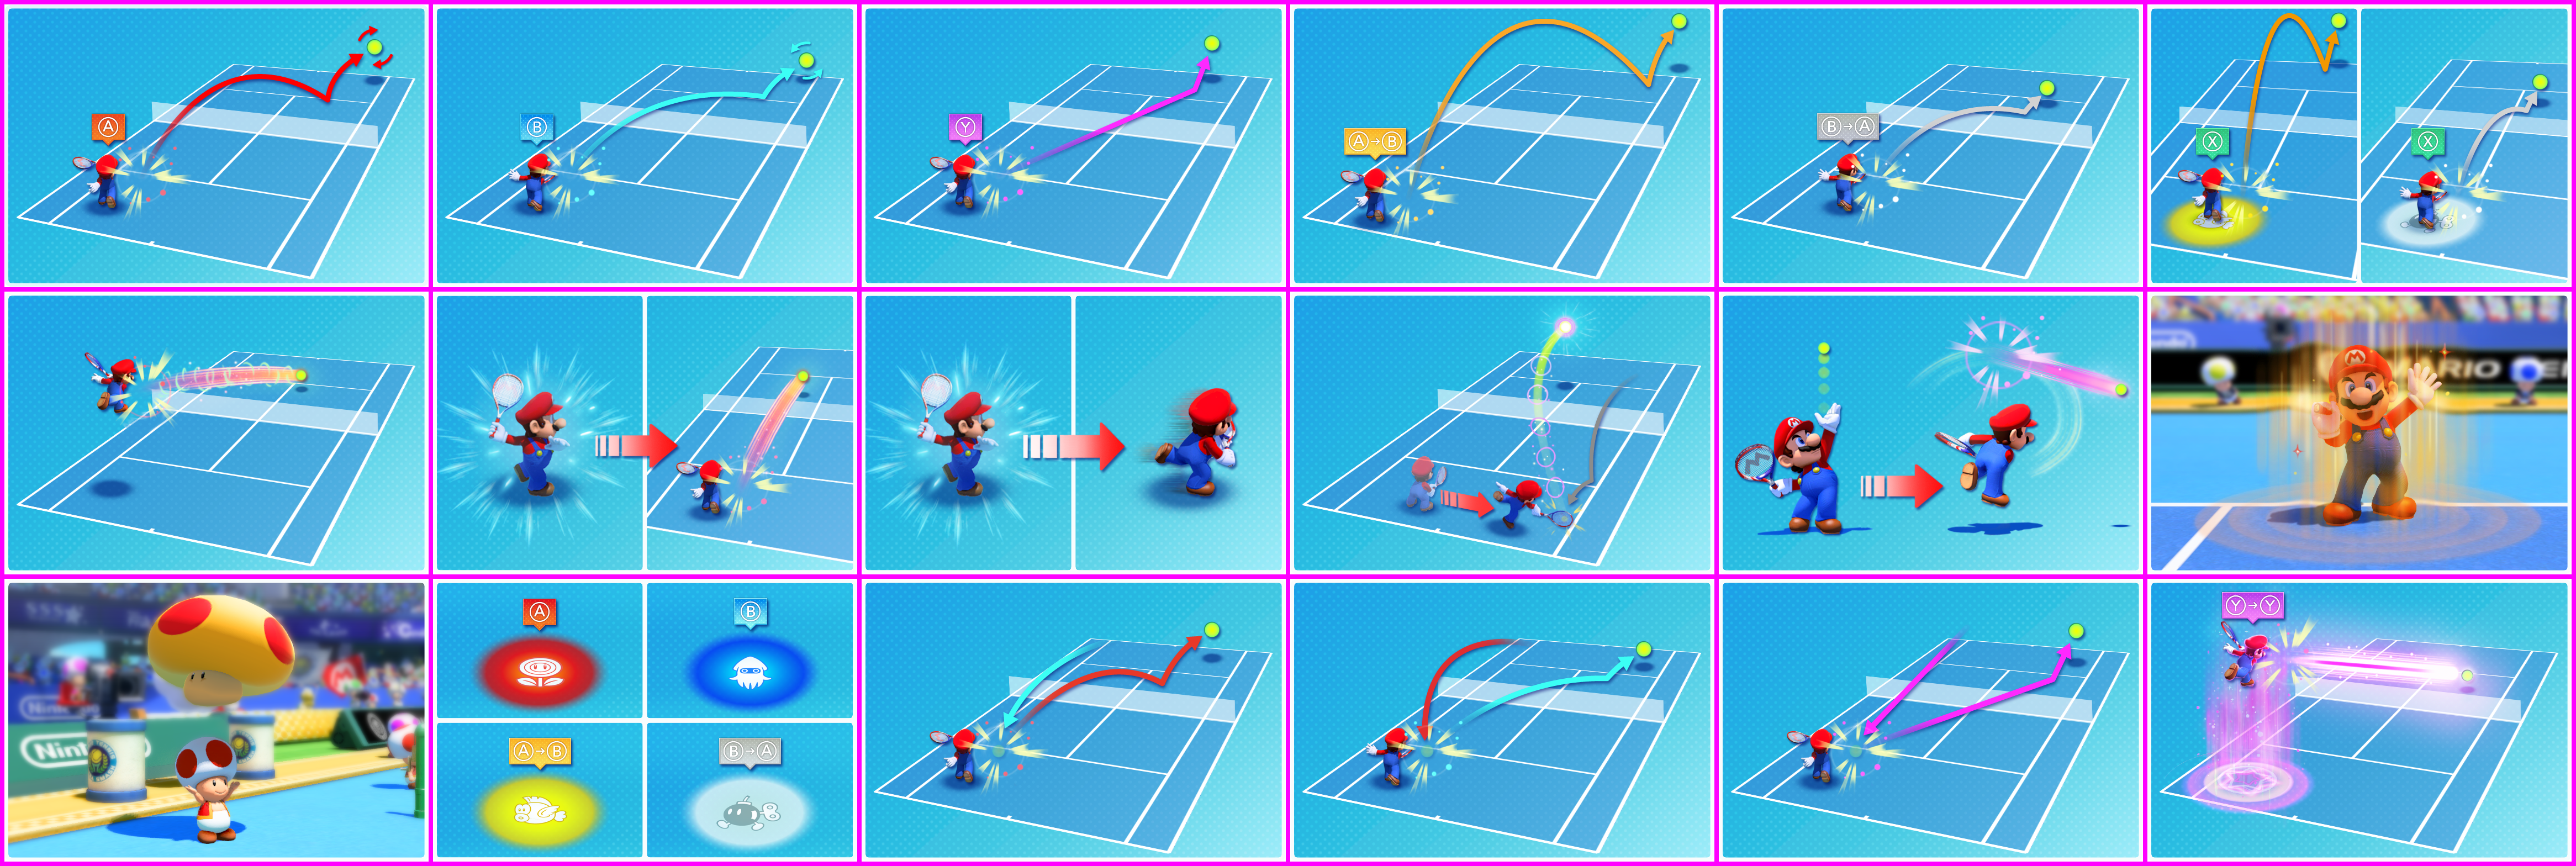 Mario Tennis: Ultra Smash - Loading Screen Hints